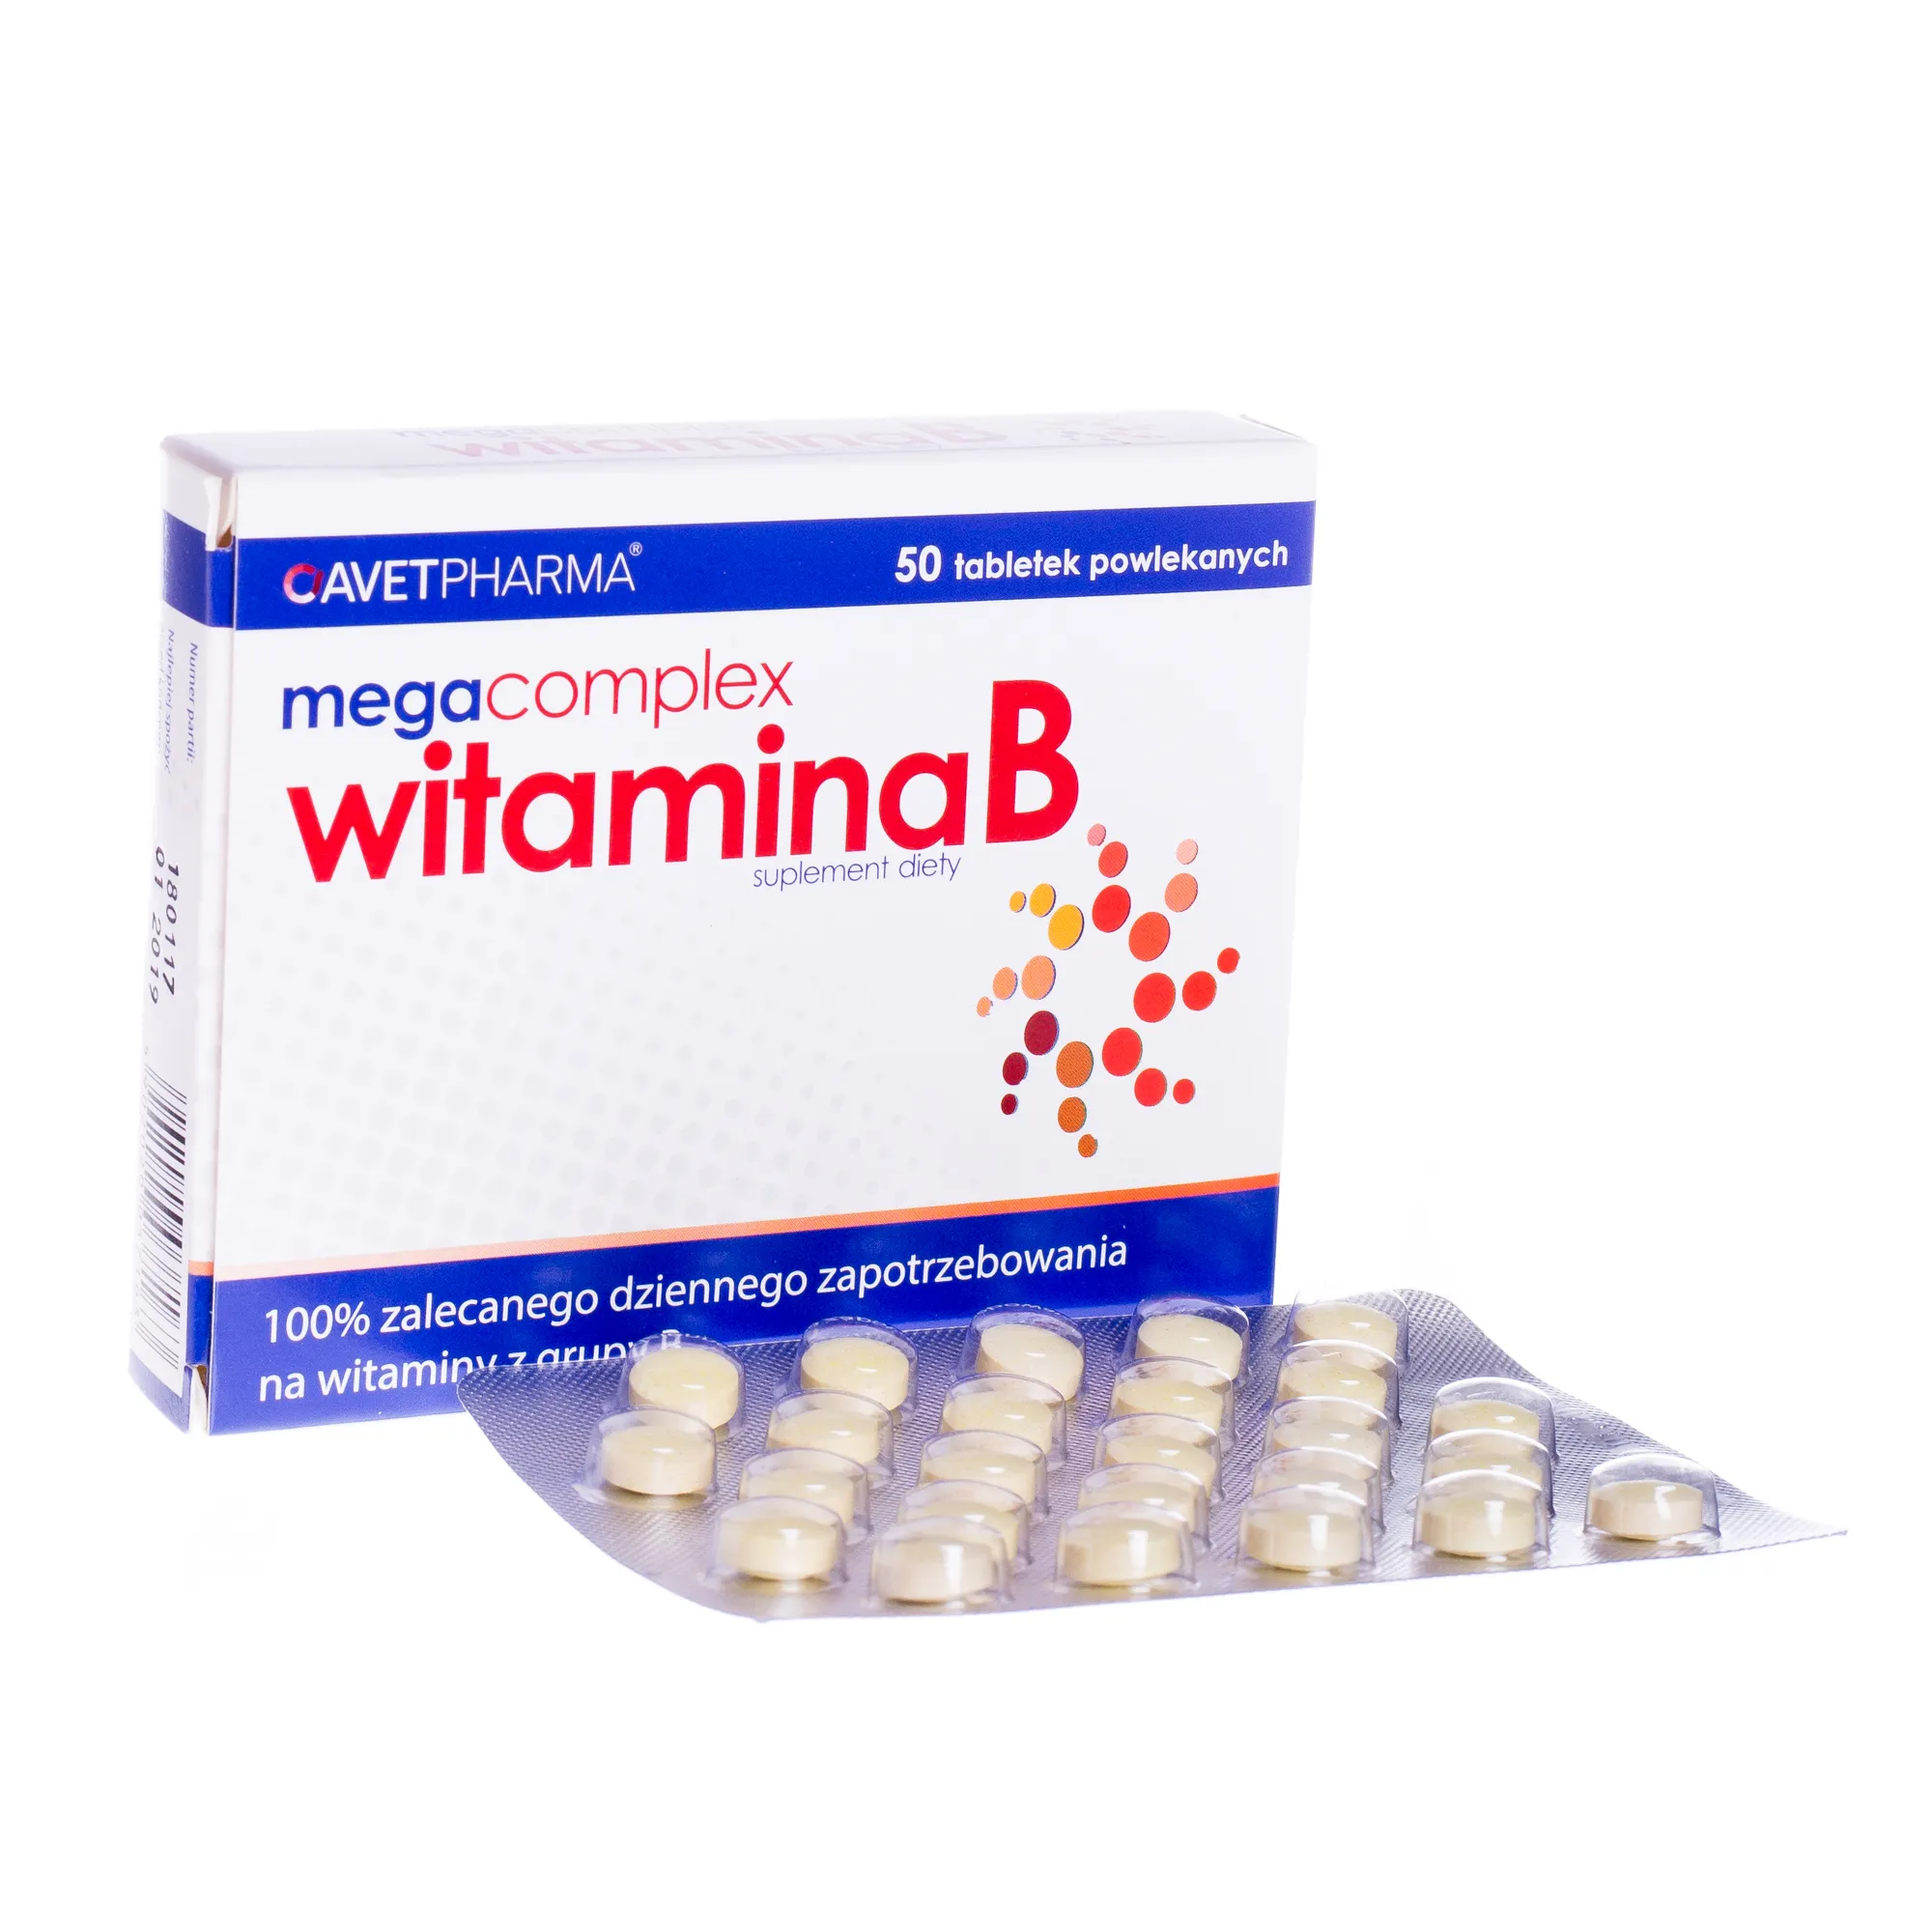 Mega Complex Witamina B, 50 tabletek powlekanych